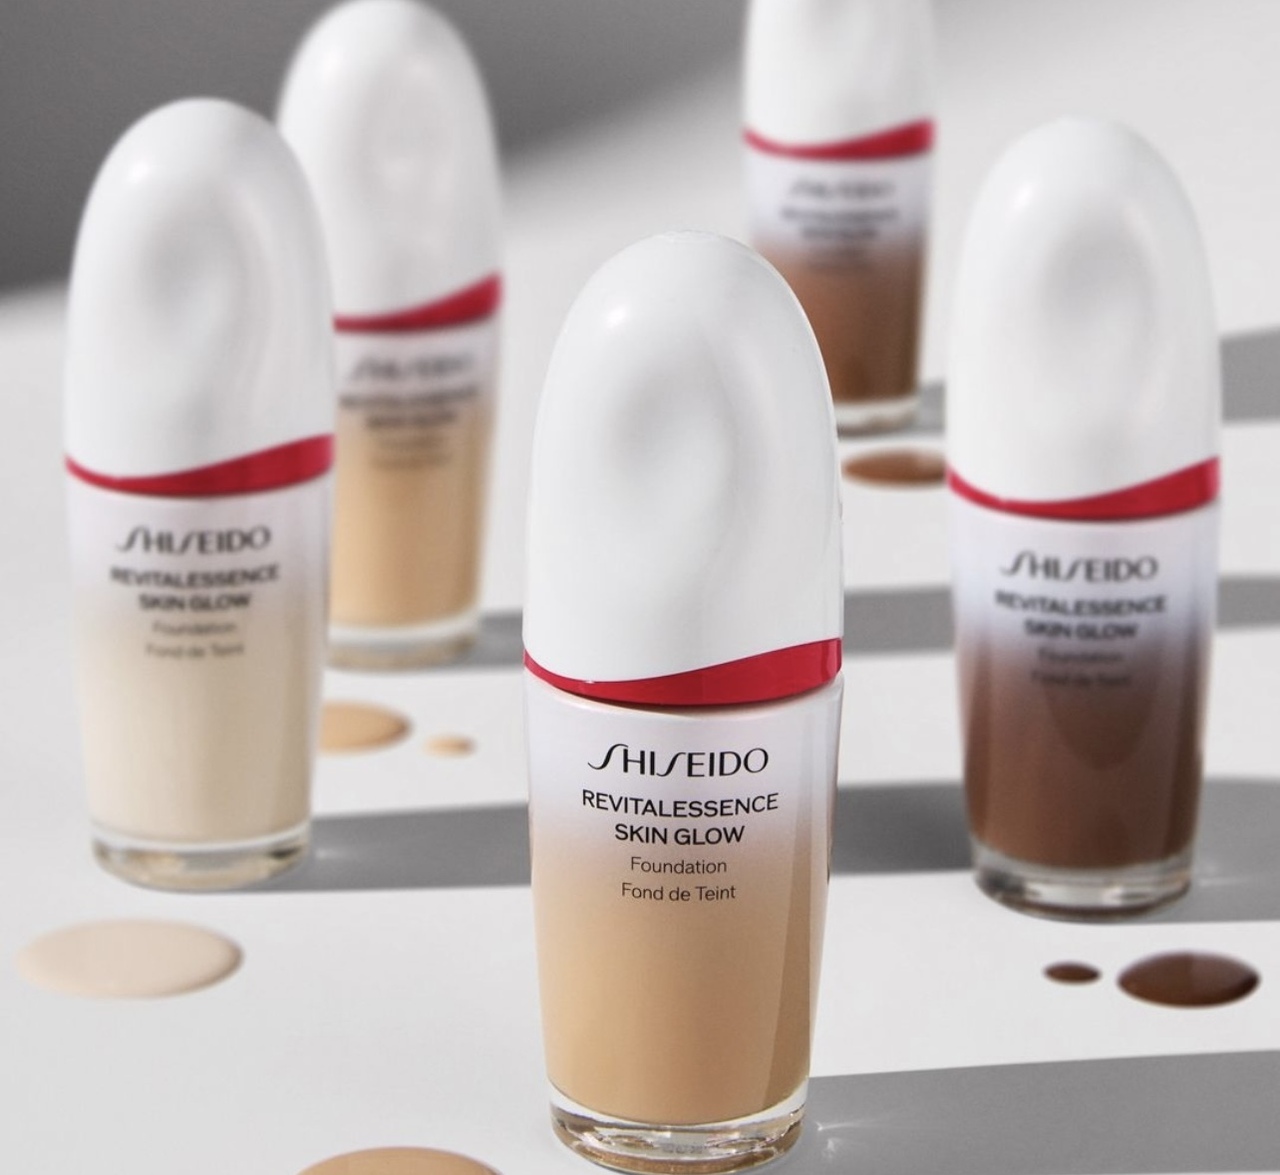 Base Revitalessence Skin Glow da Shiseido - Divulgação